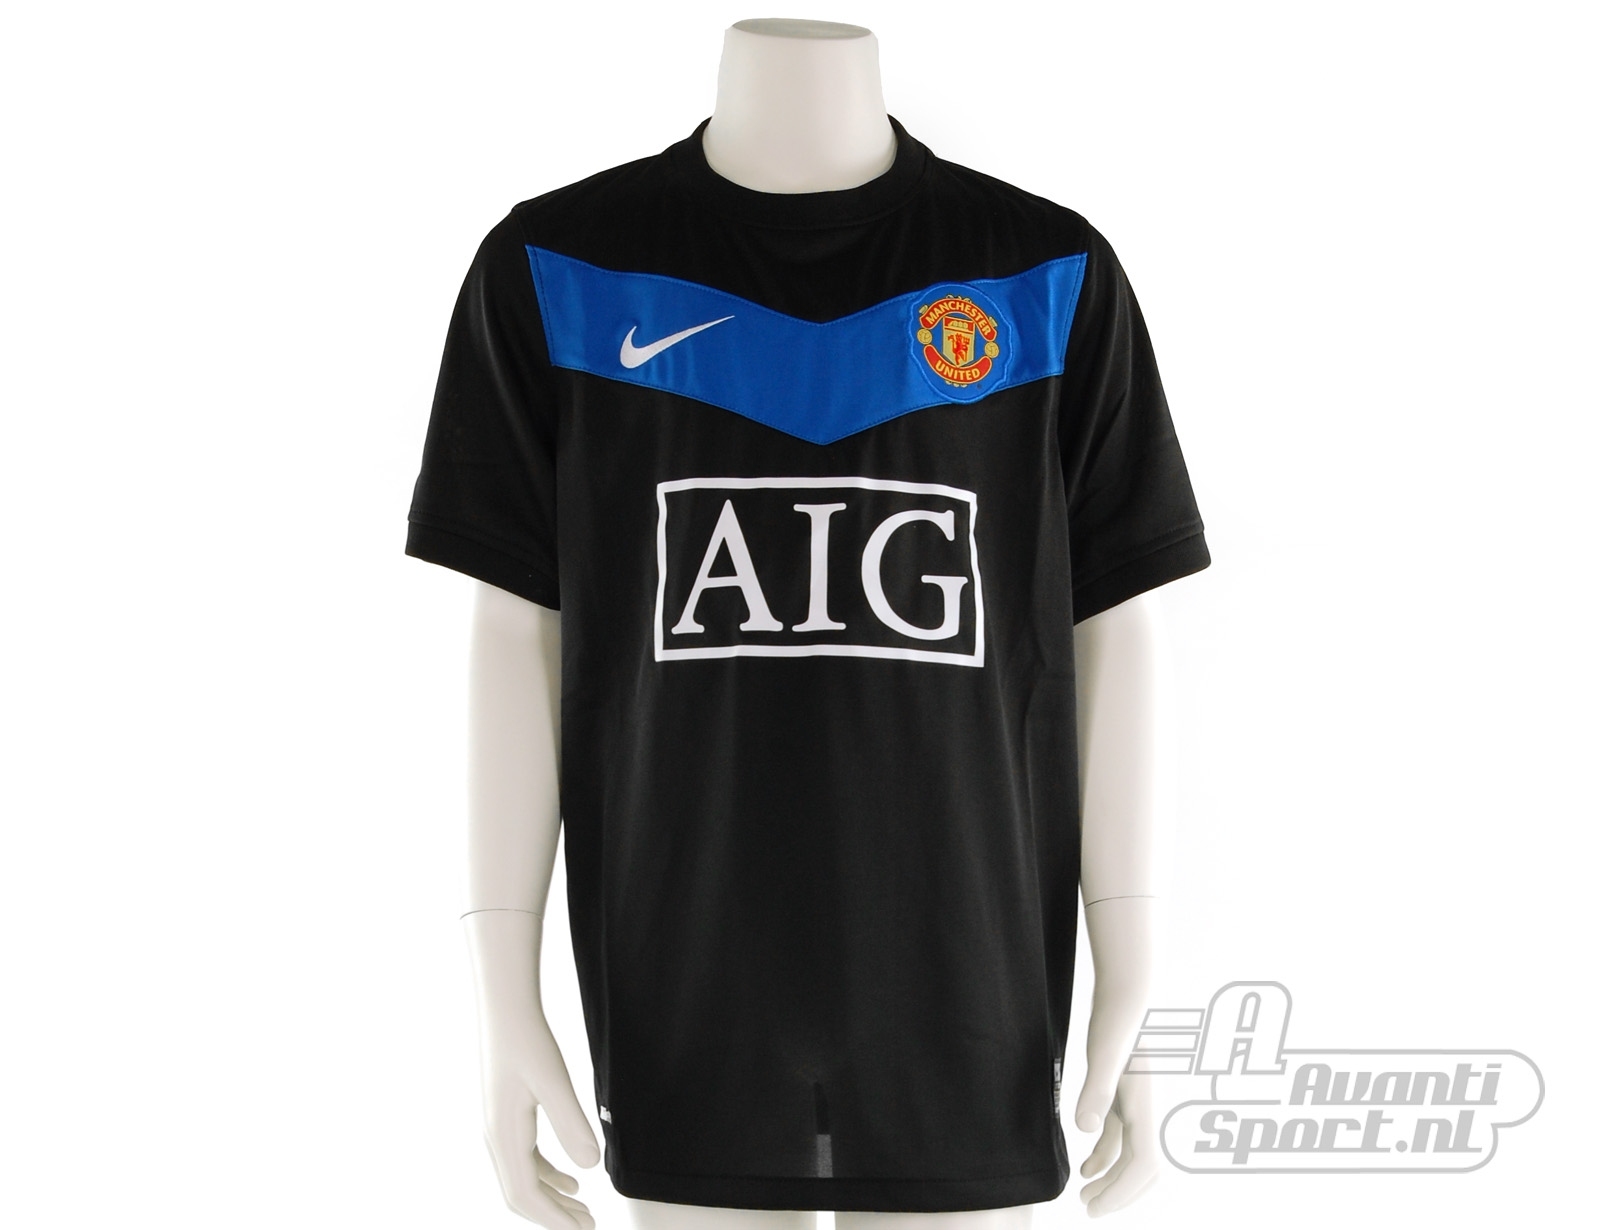 Avantisport - Nike - Manchester United Boys Away Jersey - Black/blue